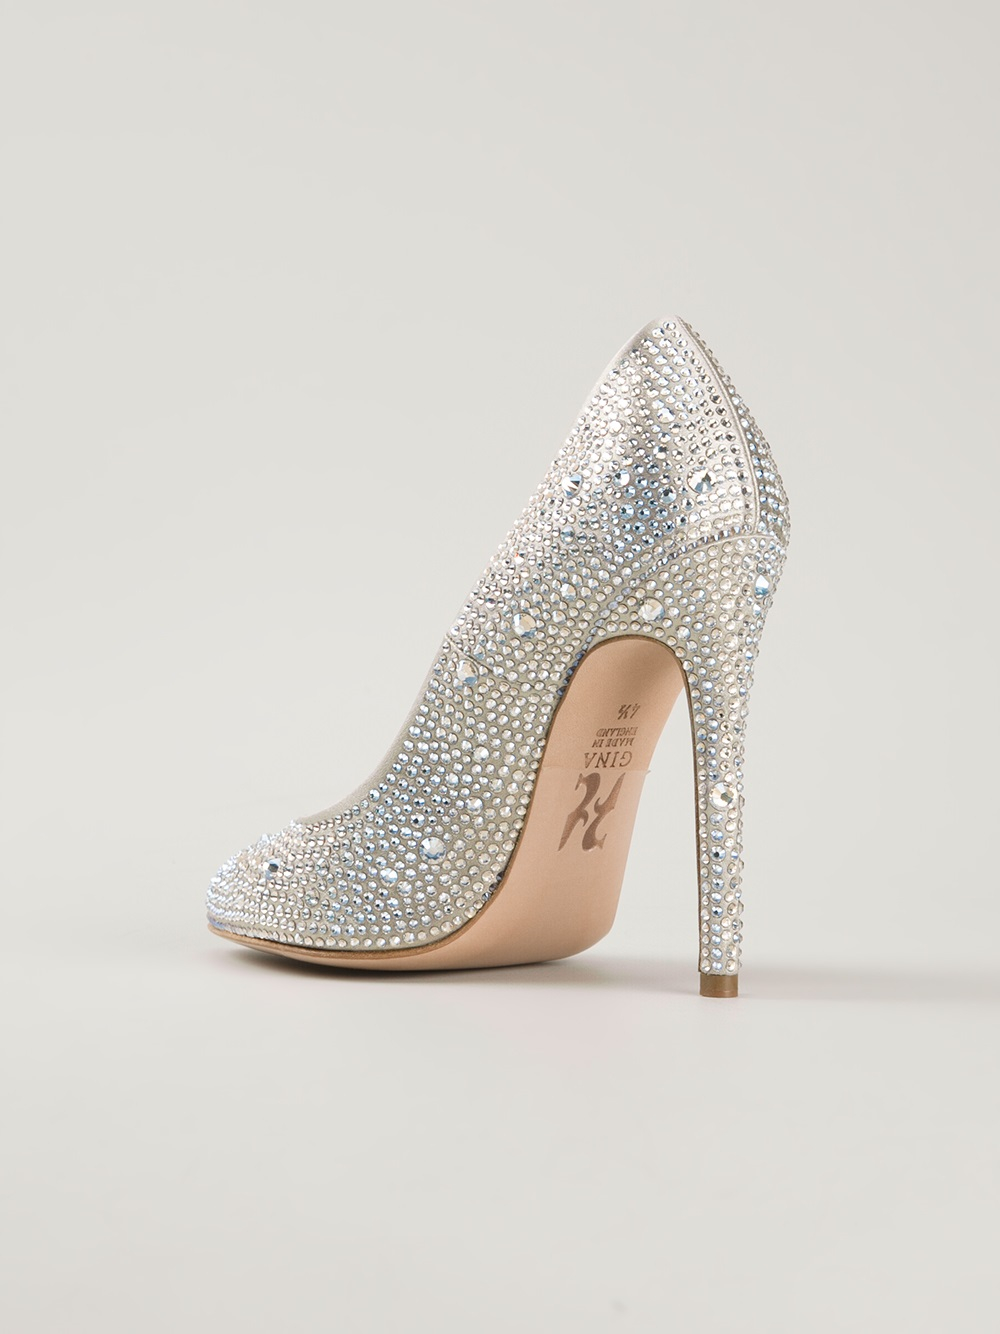 crystal studded heels